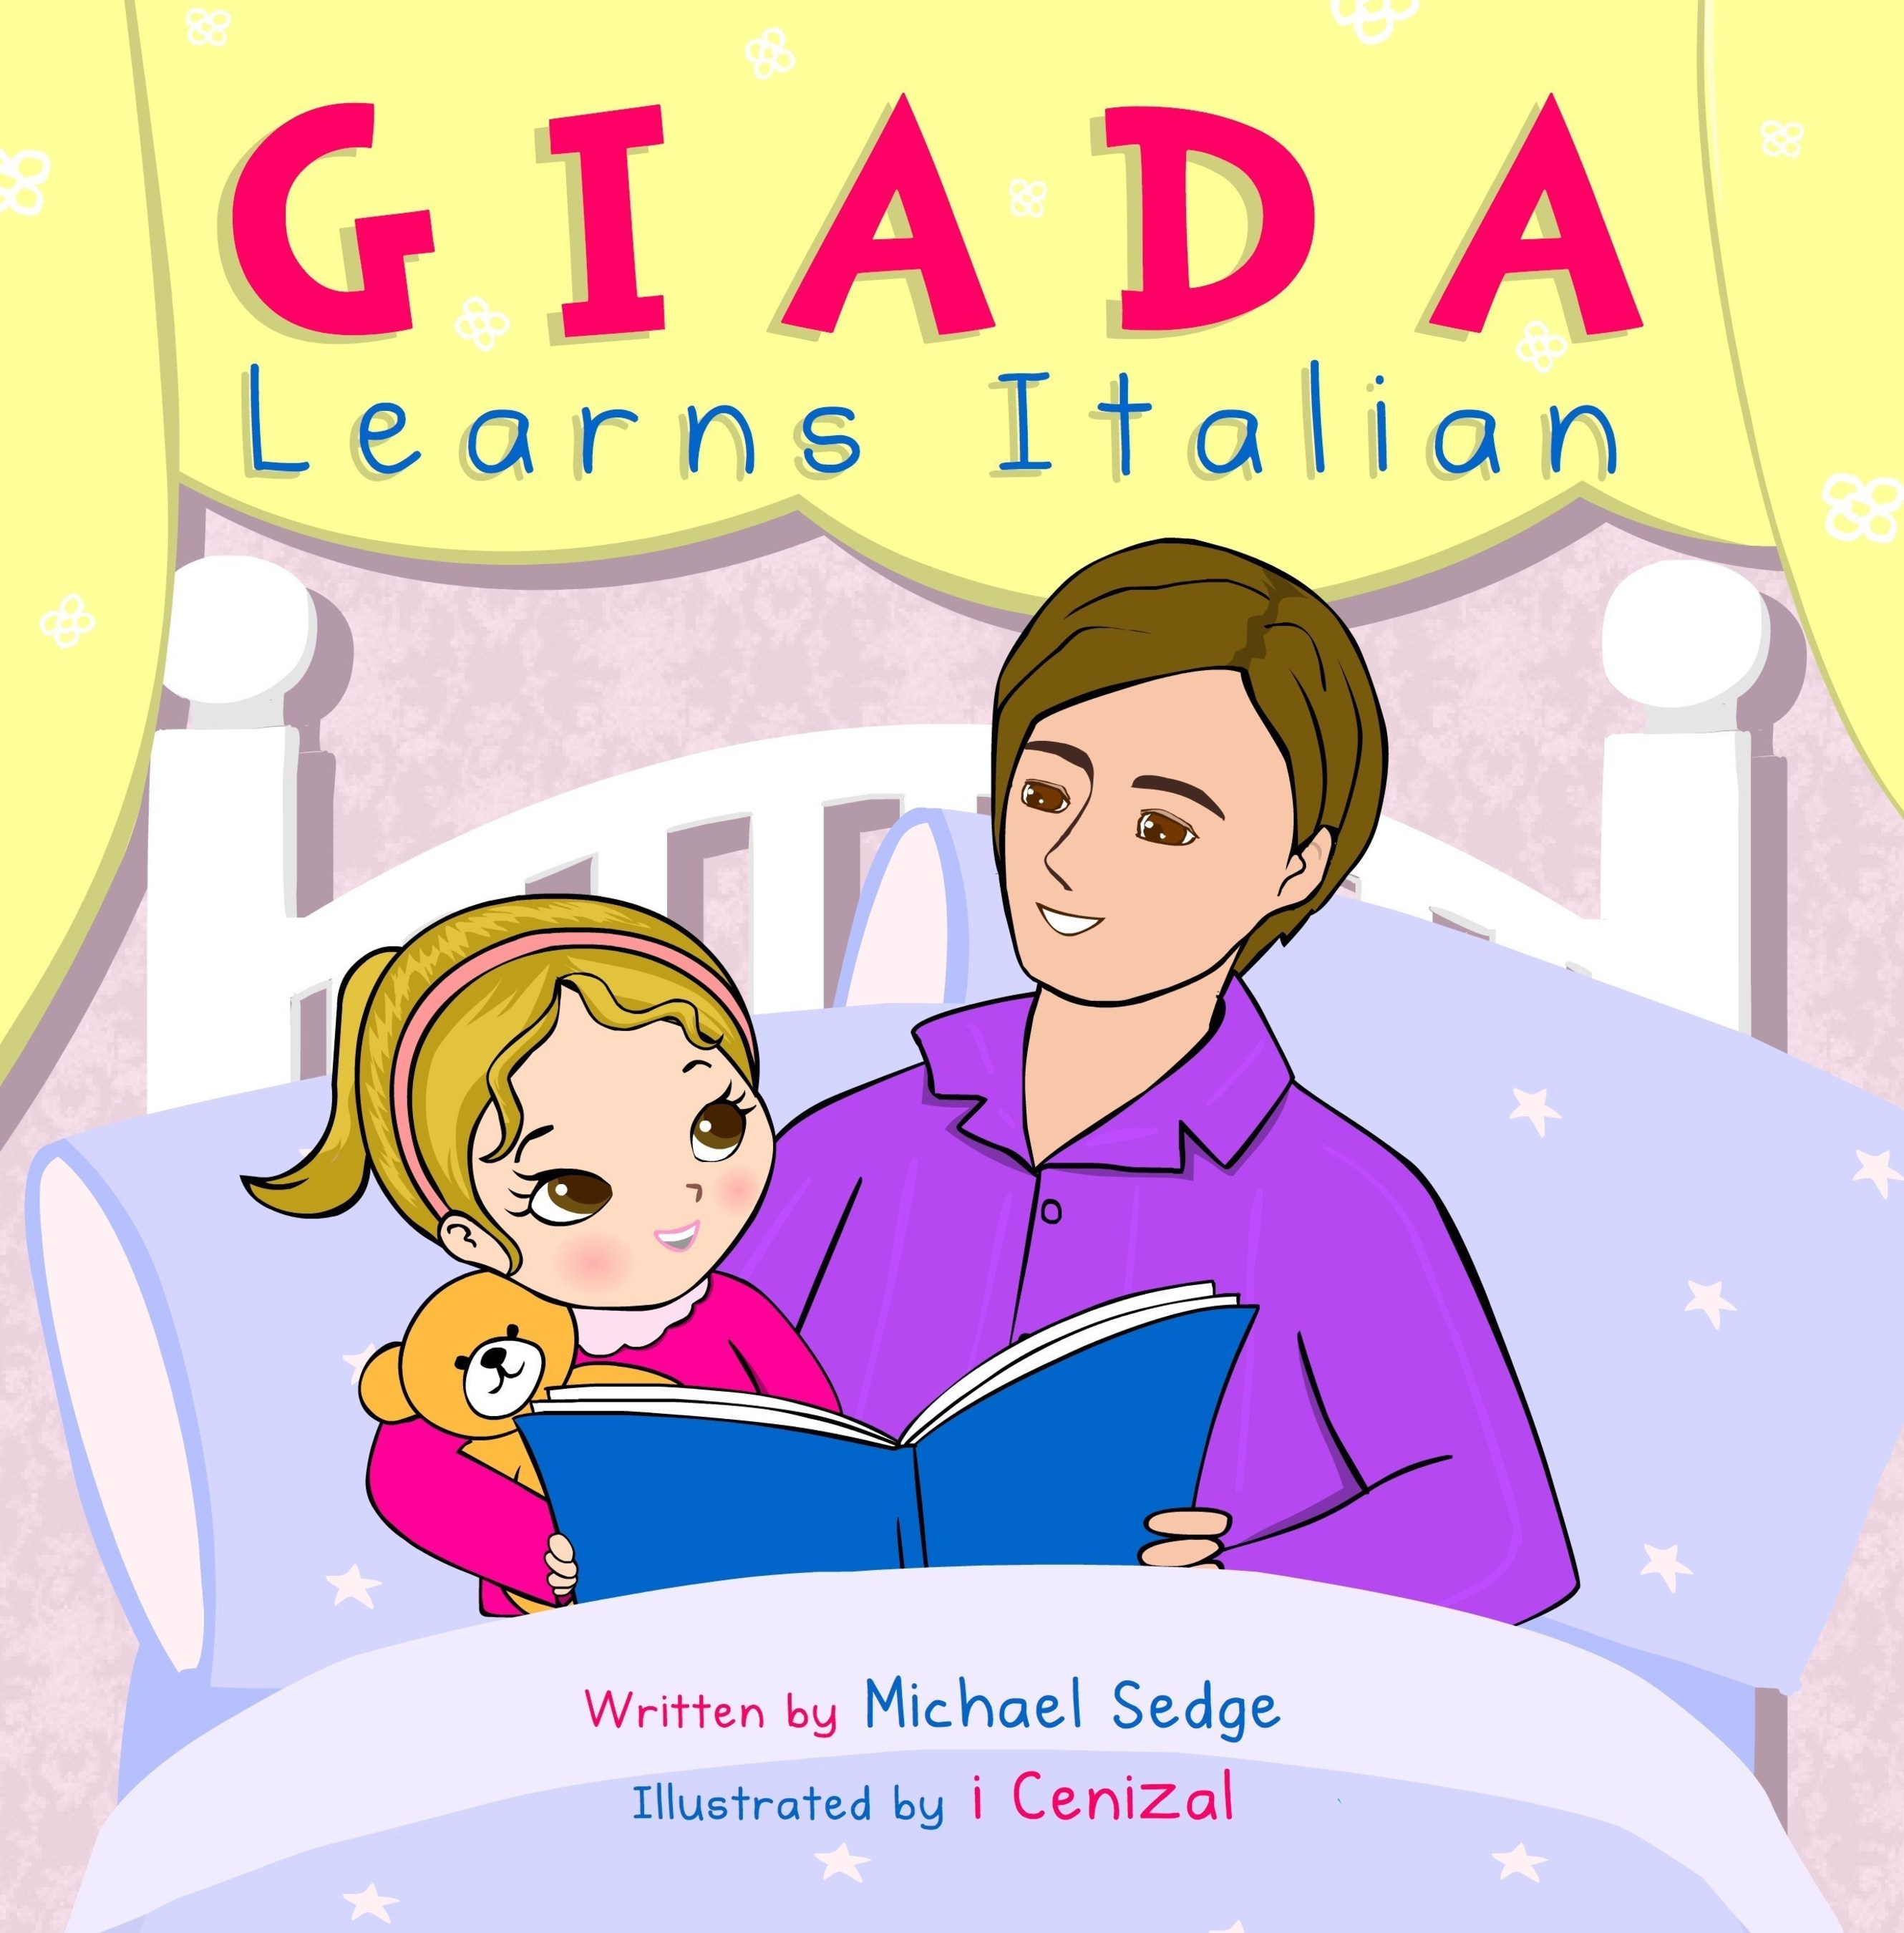 GIADA LEARNS ITALIAN: NEW CHILDREN'S LANGUAGE LEARNING BOOK